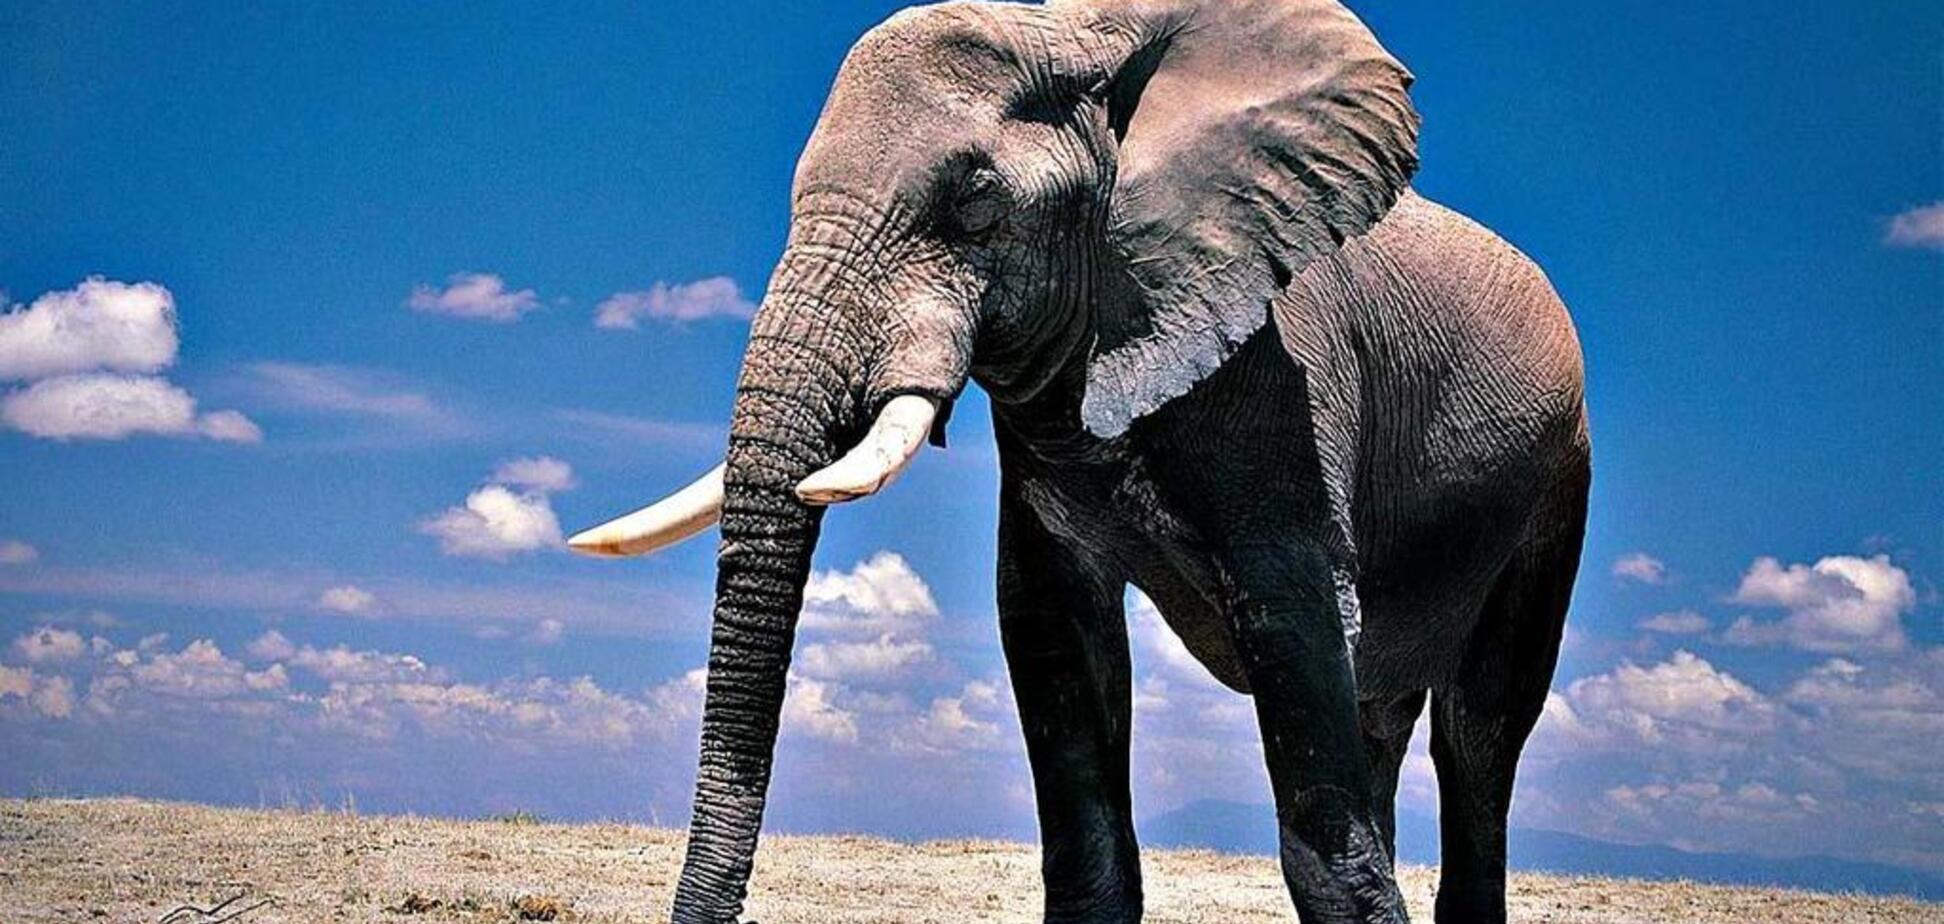 Разъяренный слон атаковал машину с туристами в ЮАР: видео